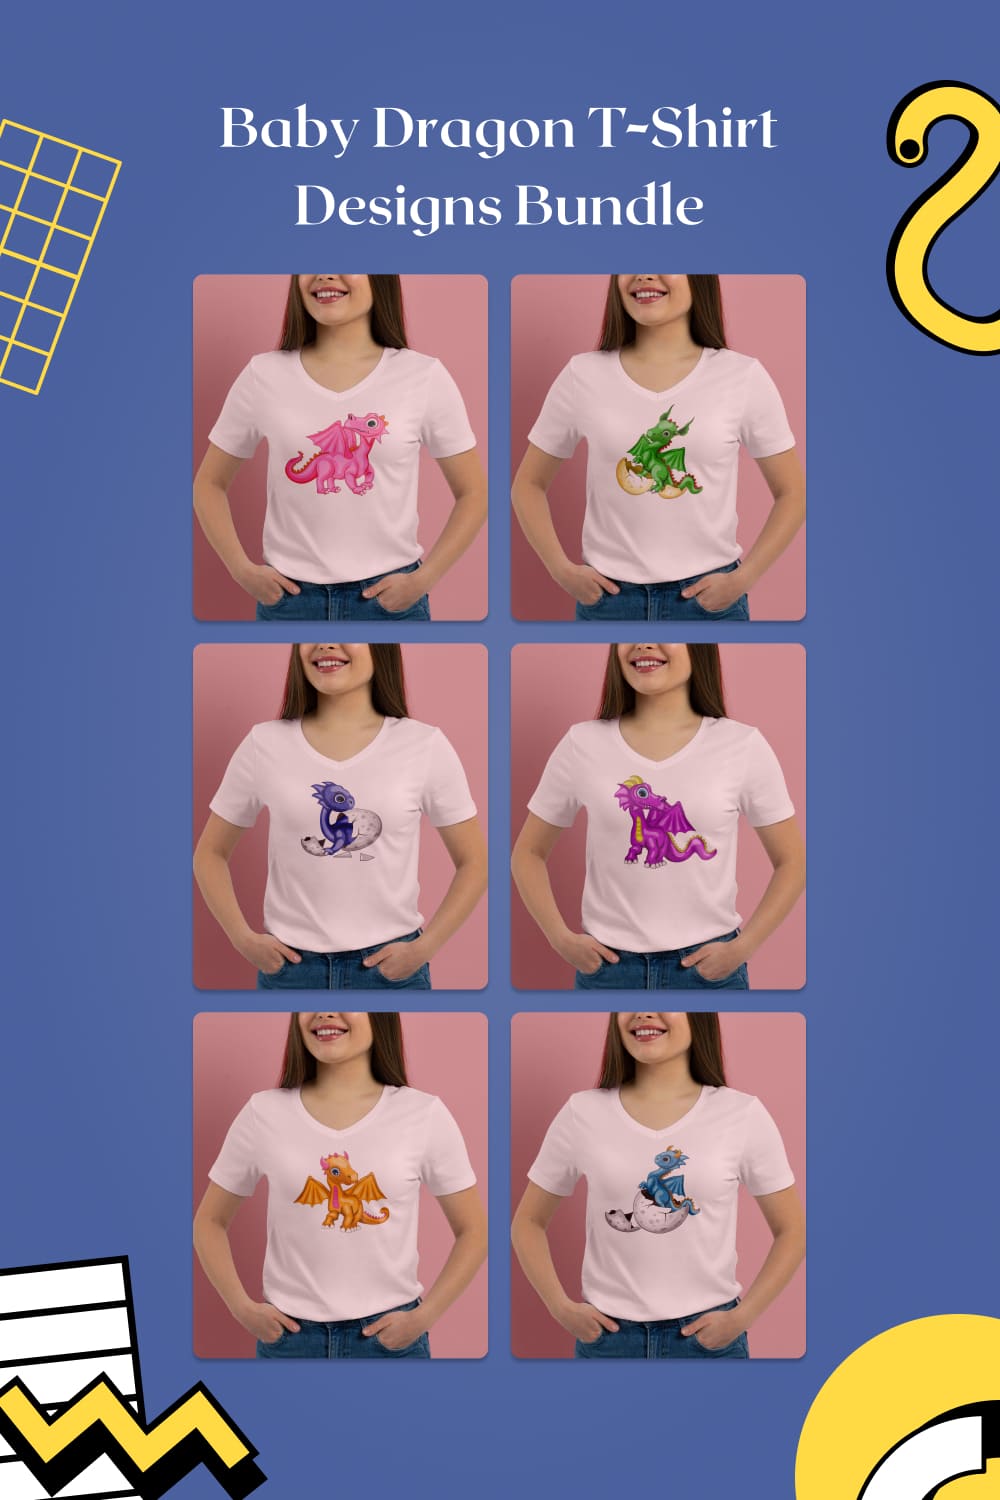 Baby Dragon T-shirt Designs Bundle - Pinterest.